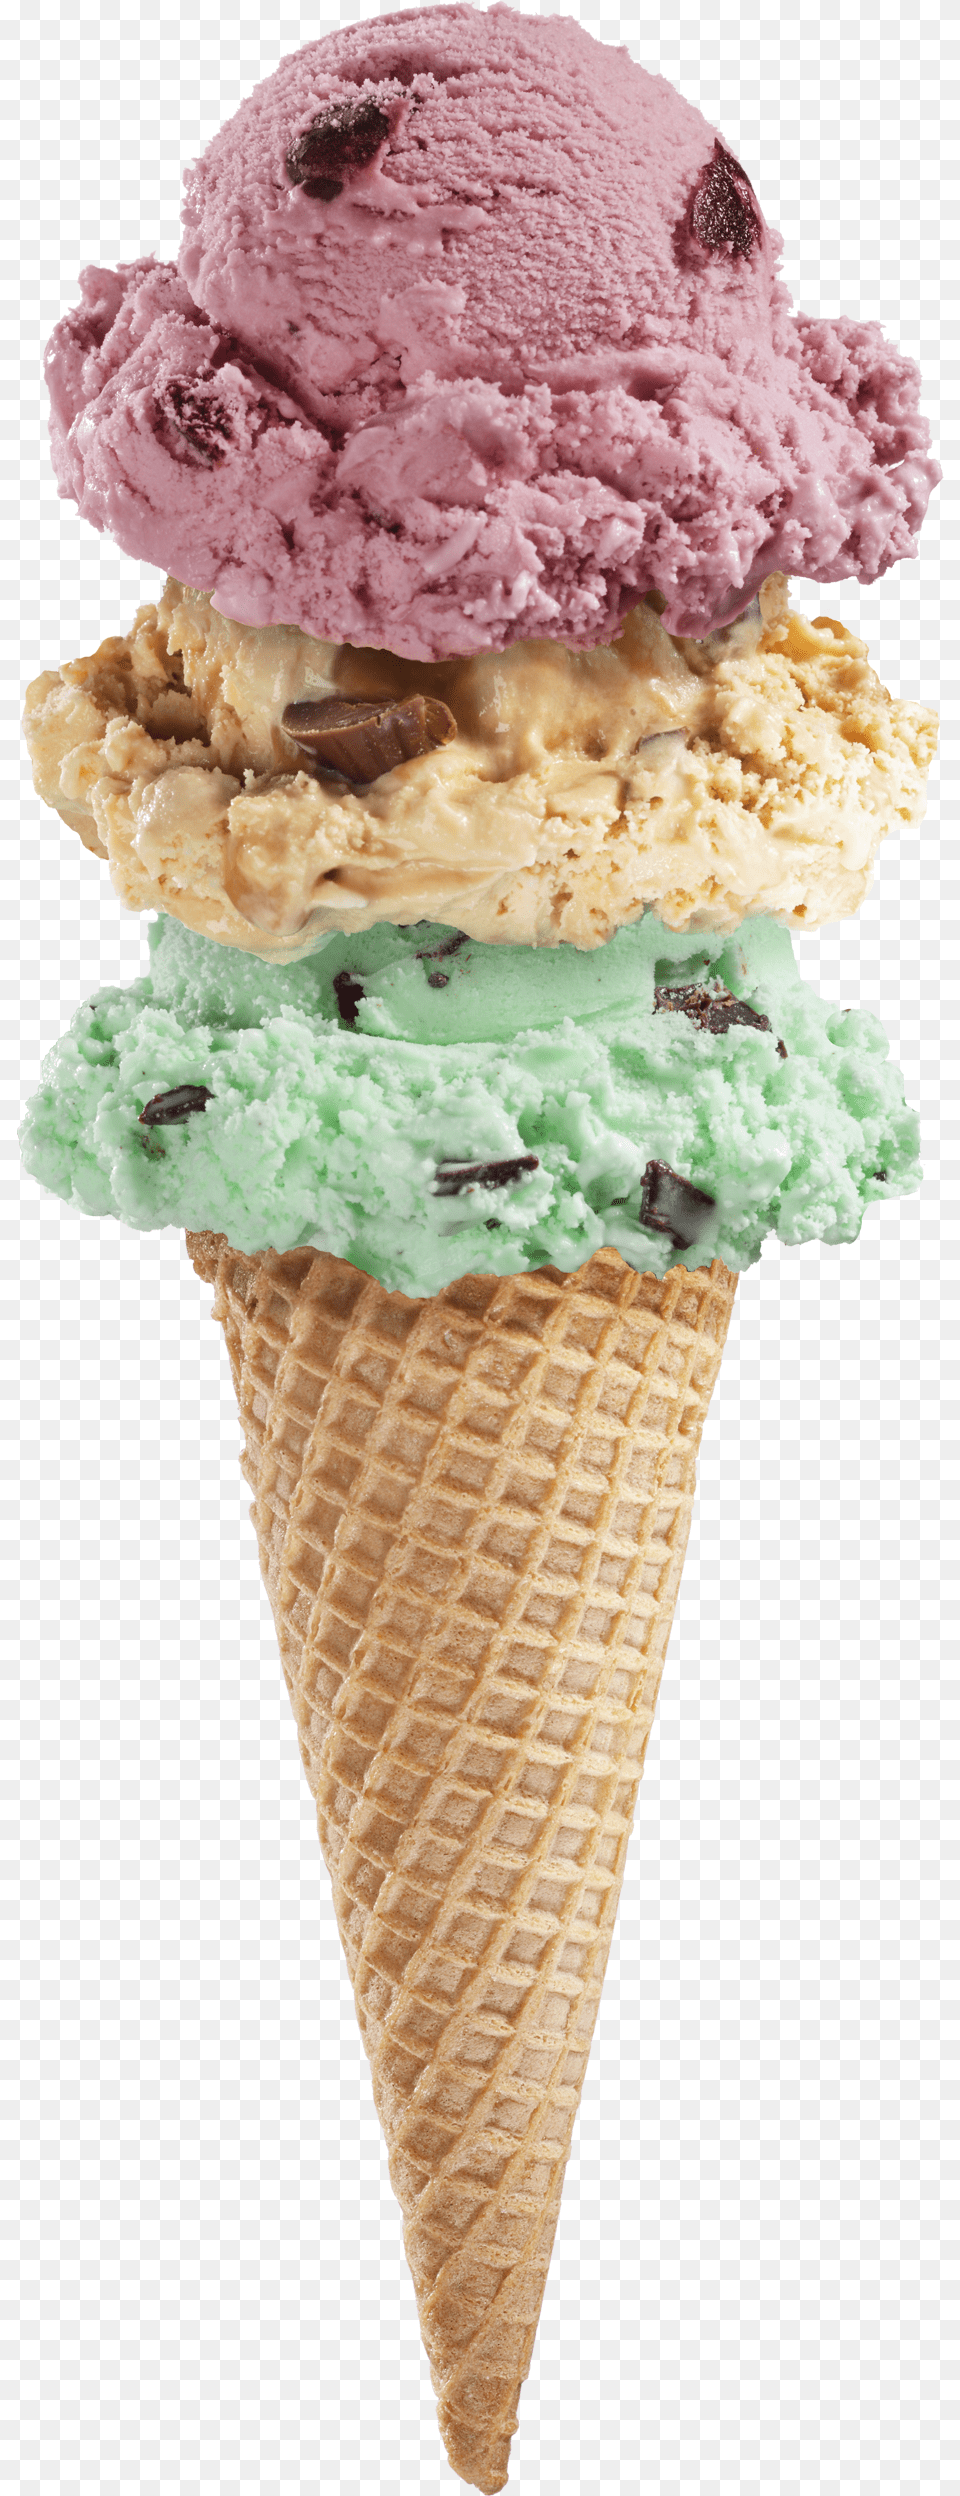 Ice Cream Scoop With Ice Cream Download Ice Cream Cone, Dessert, Food, Ice Cream, Soft Serve Ice Cream Png